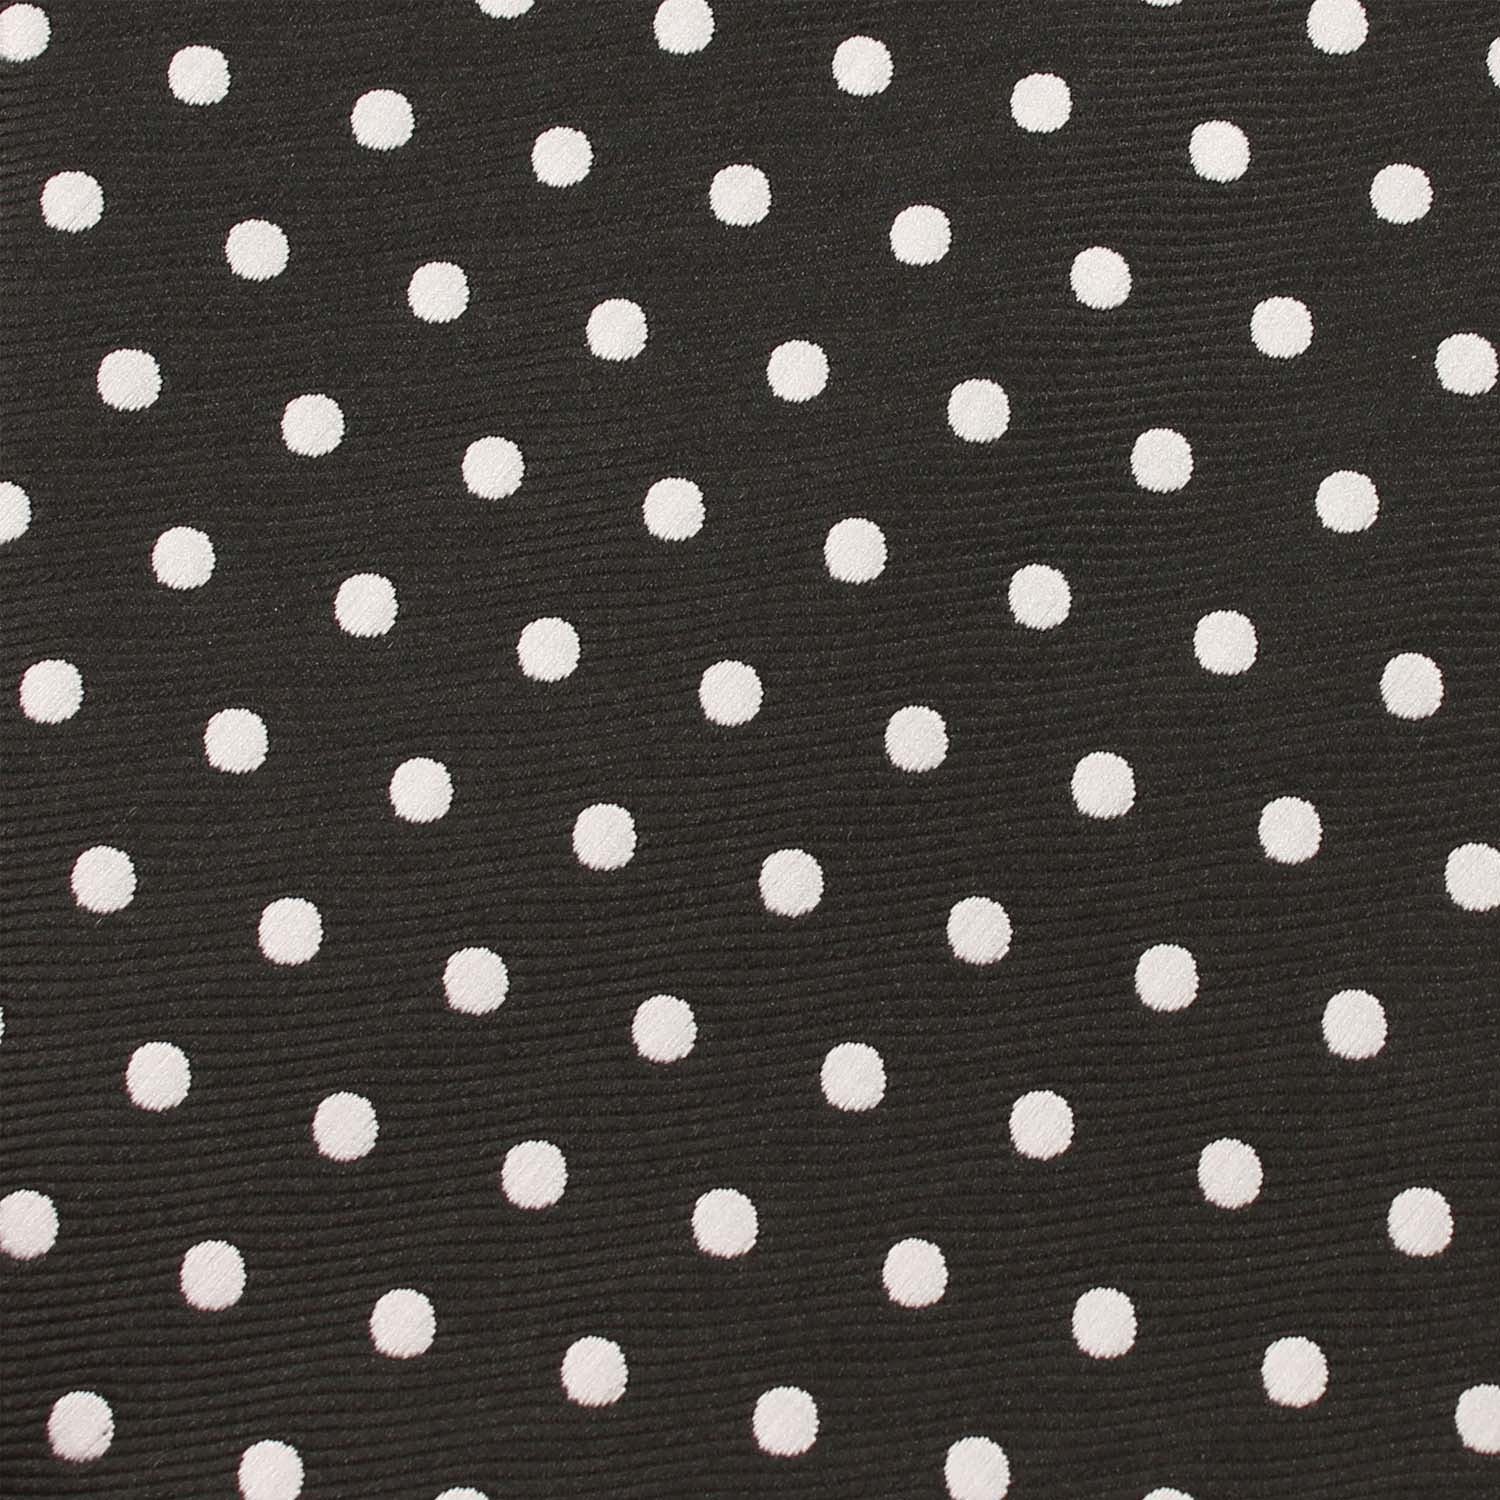 Royal Black Polka Dots Fabric Skinny Tie X723